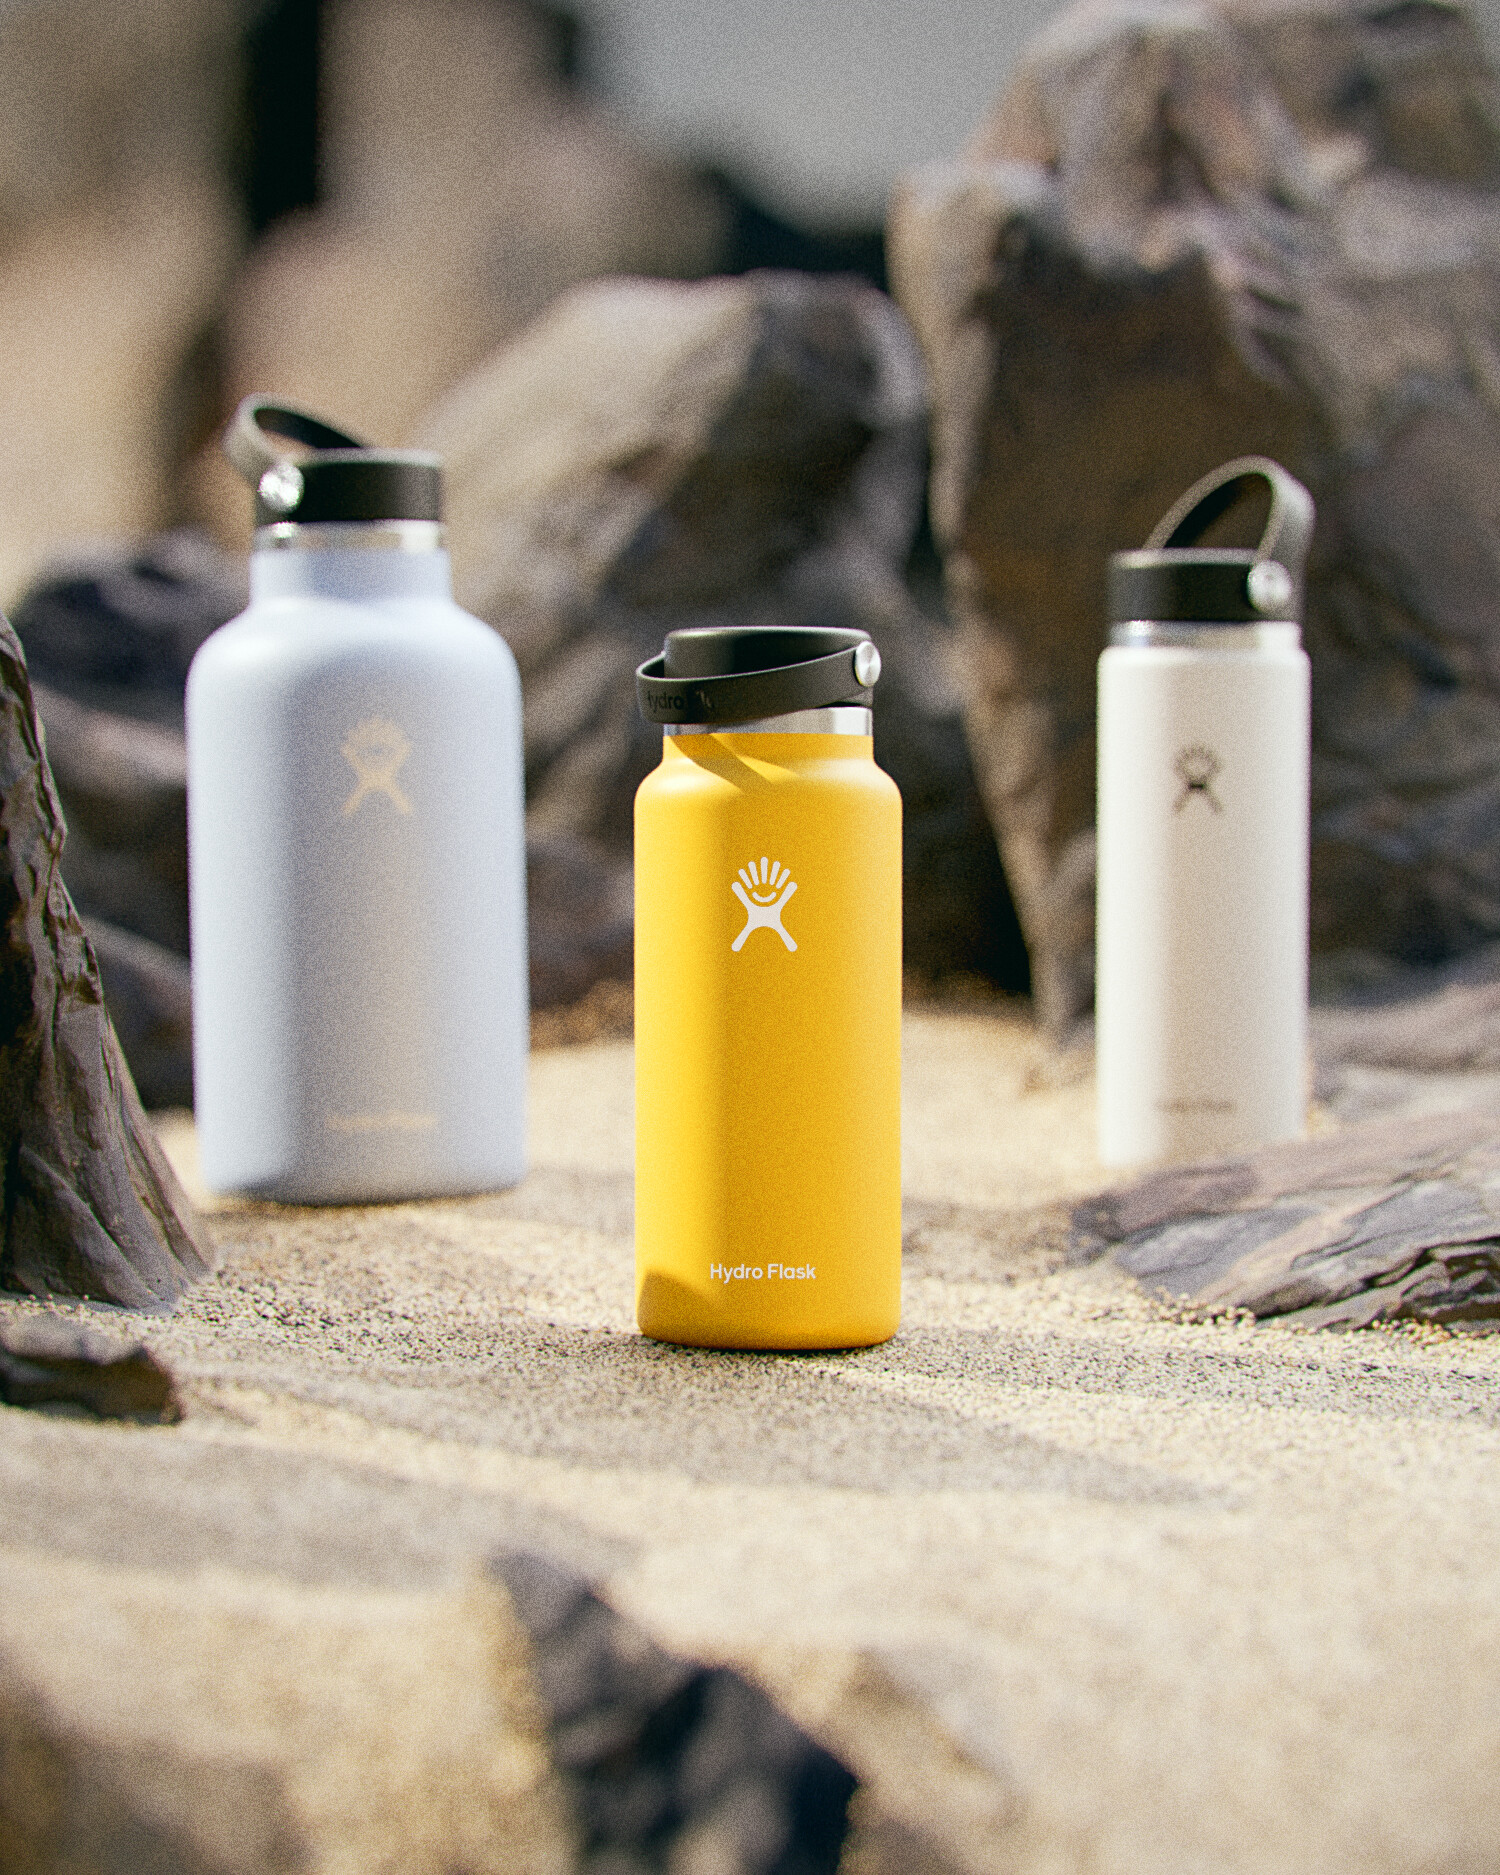 Brand Spotlight: Hydro Flask